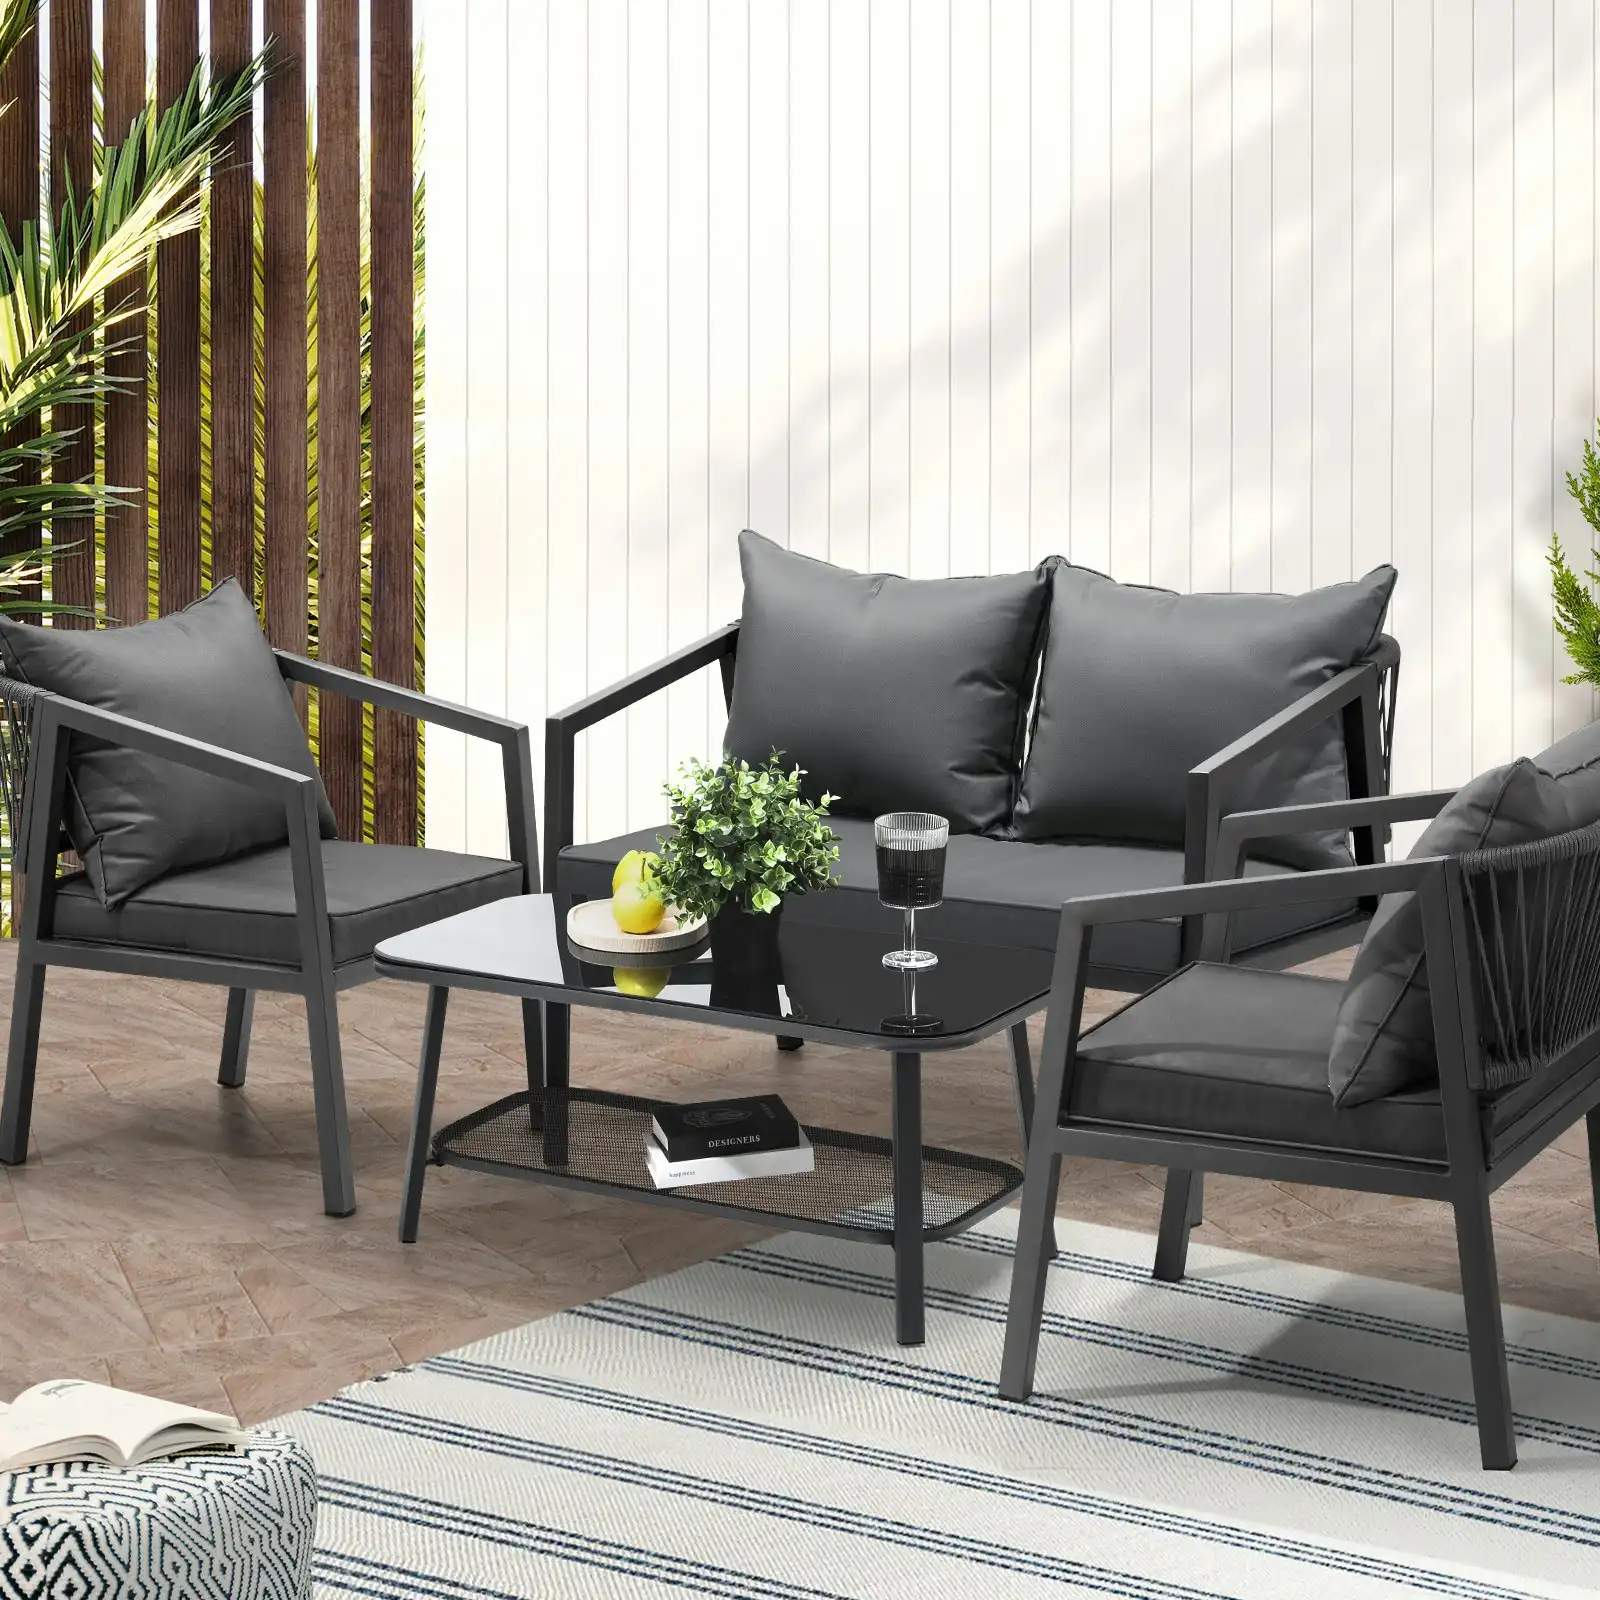 Livsip 4PCS Garden Outdoor Furniture Setting Lounge Patio Sofa Table Chairs Set